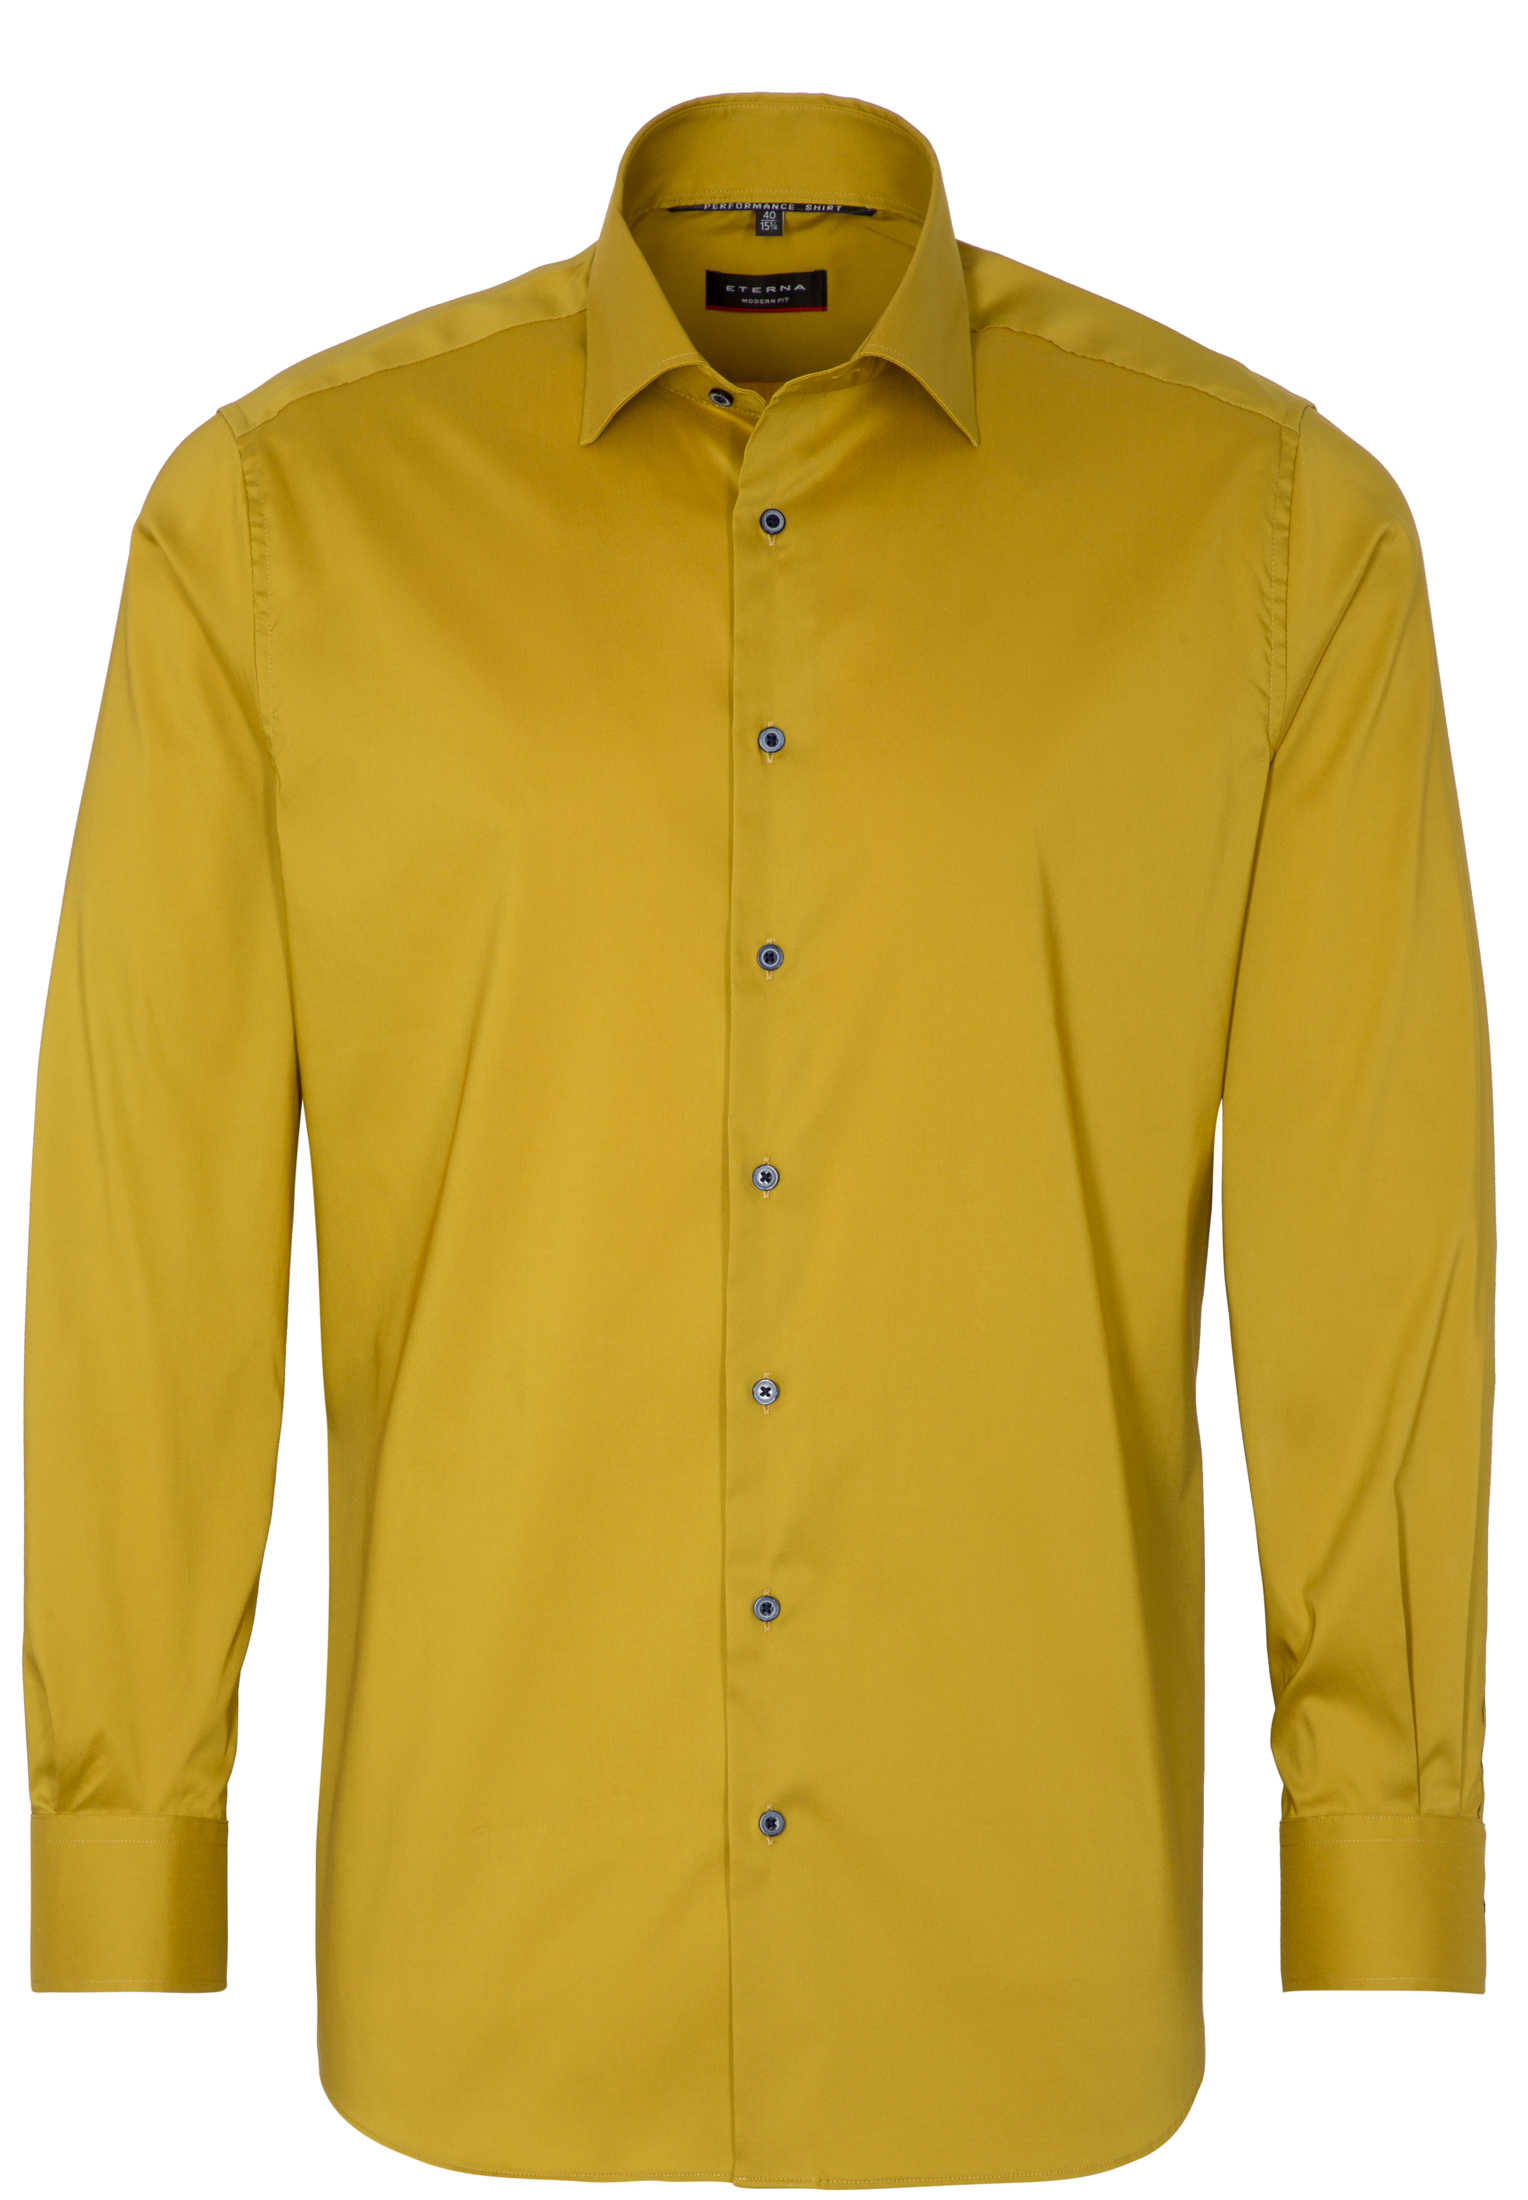 MODERN FIT Performance Shirt in gelb unifarben